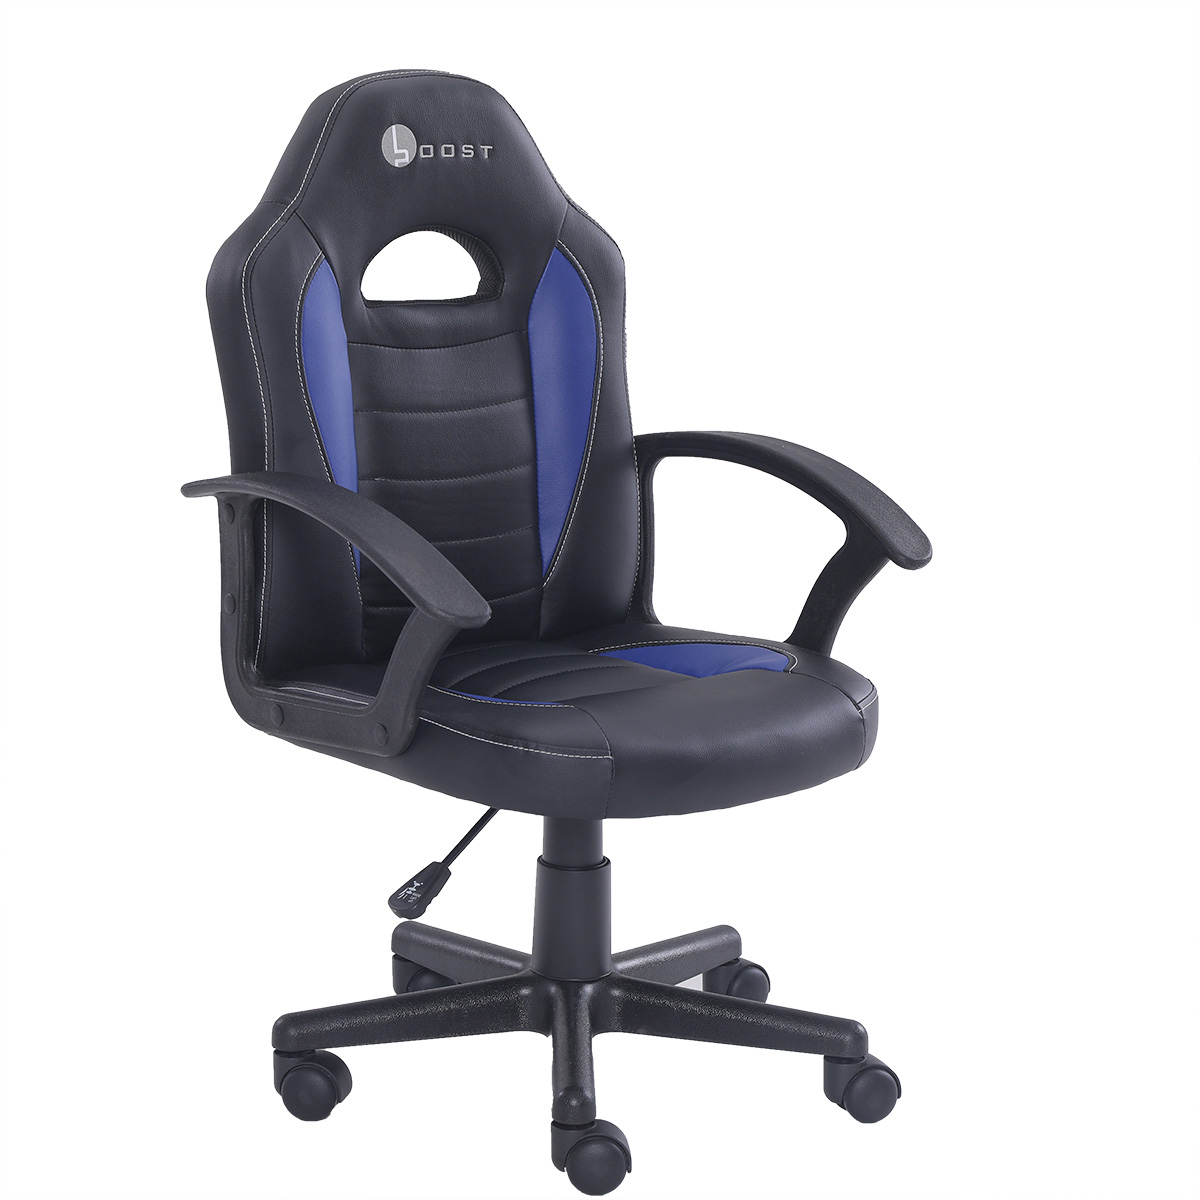 KC373-BB Children’s Gaming / Desk Chair (Black/Blue)